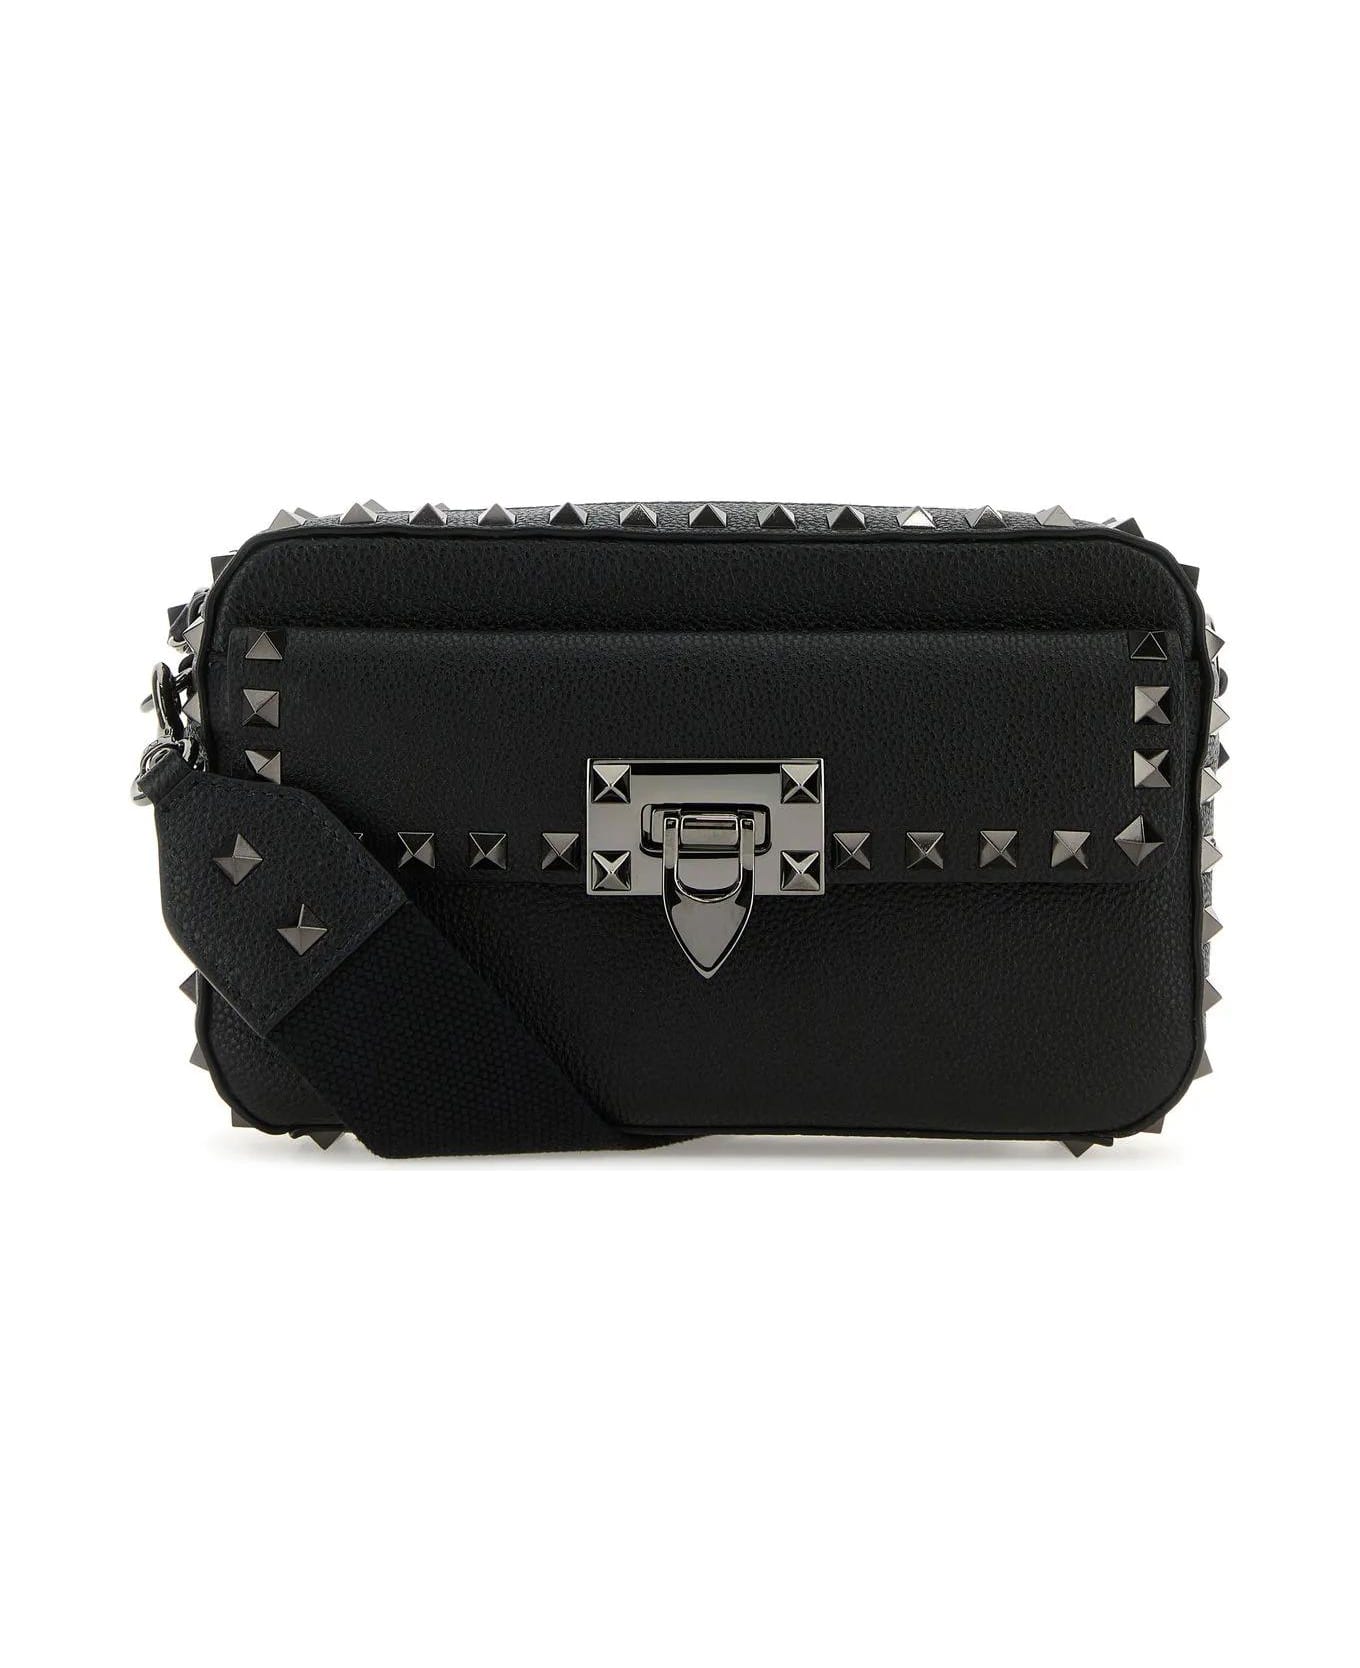 Valentino Garavani Black Leather Rockstud Crossbody Bag - NERO ショルダーバッグ